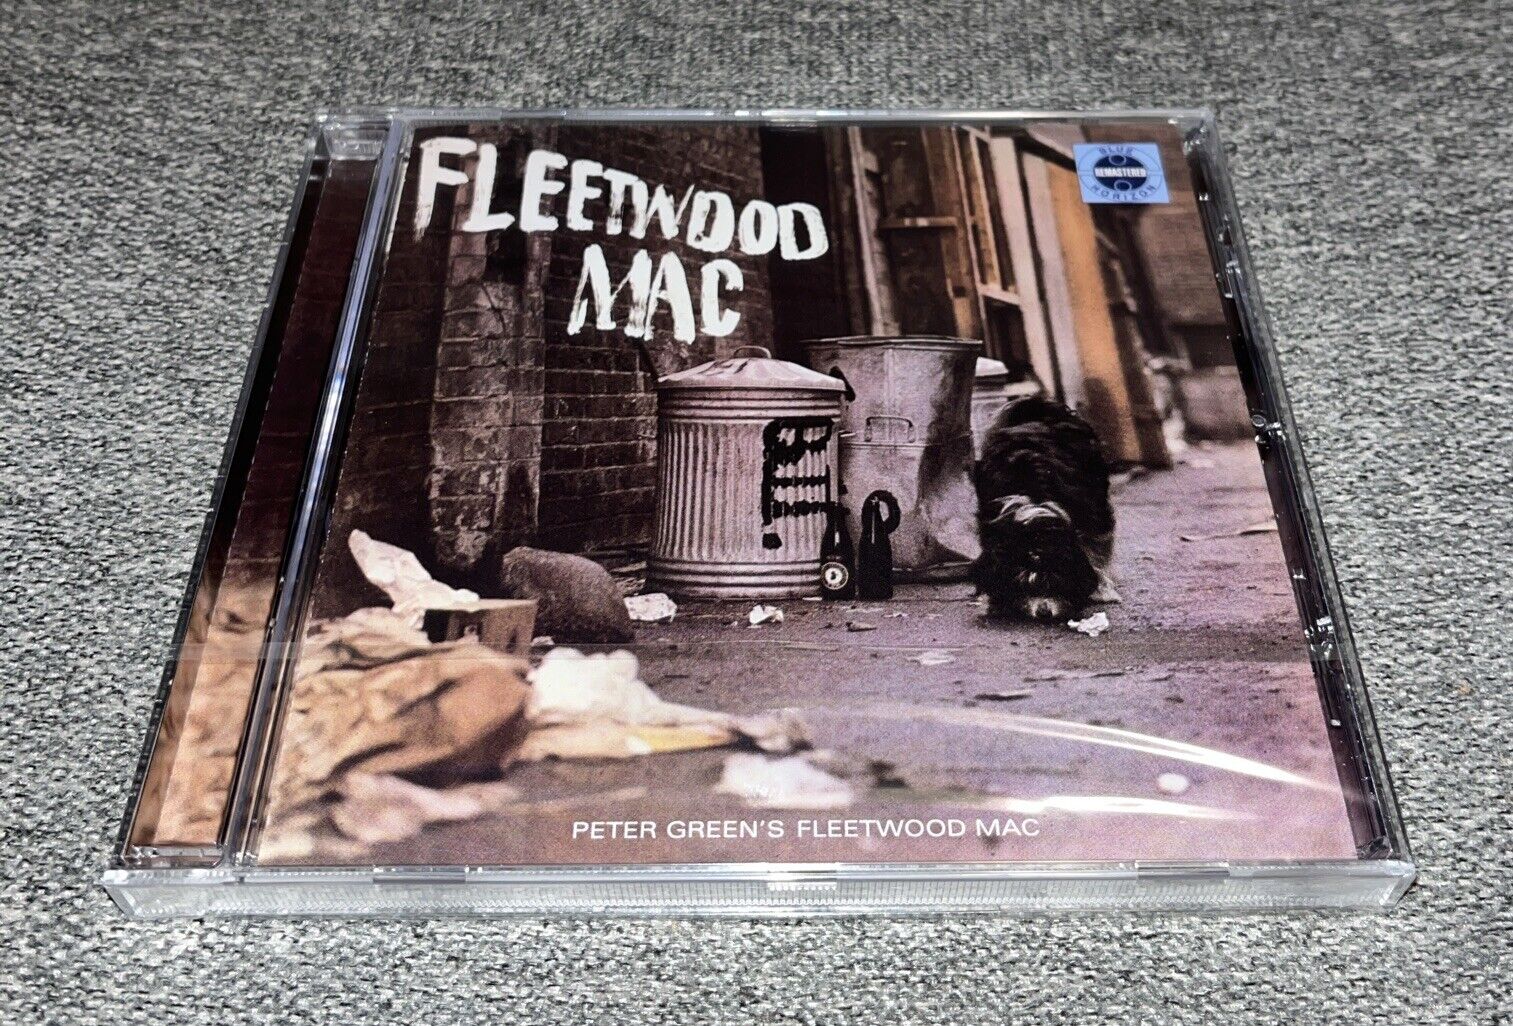 Peter Green's Fleetwood Mac by Fleetwood Mac (CD, 2004)